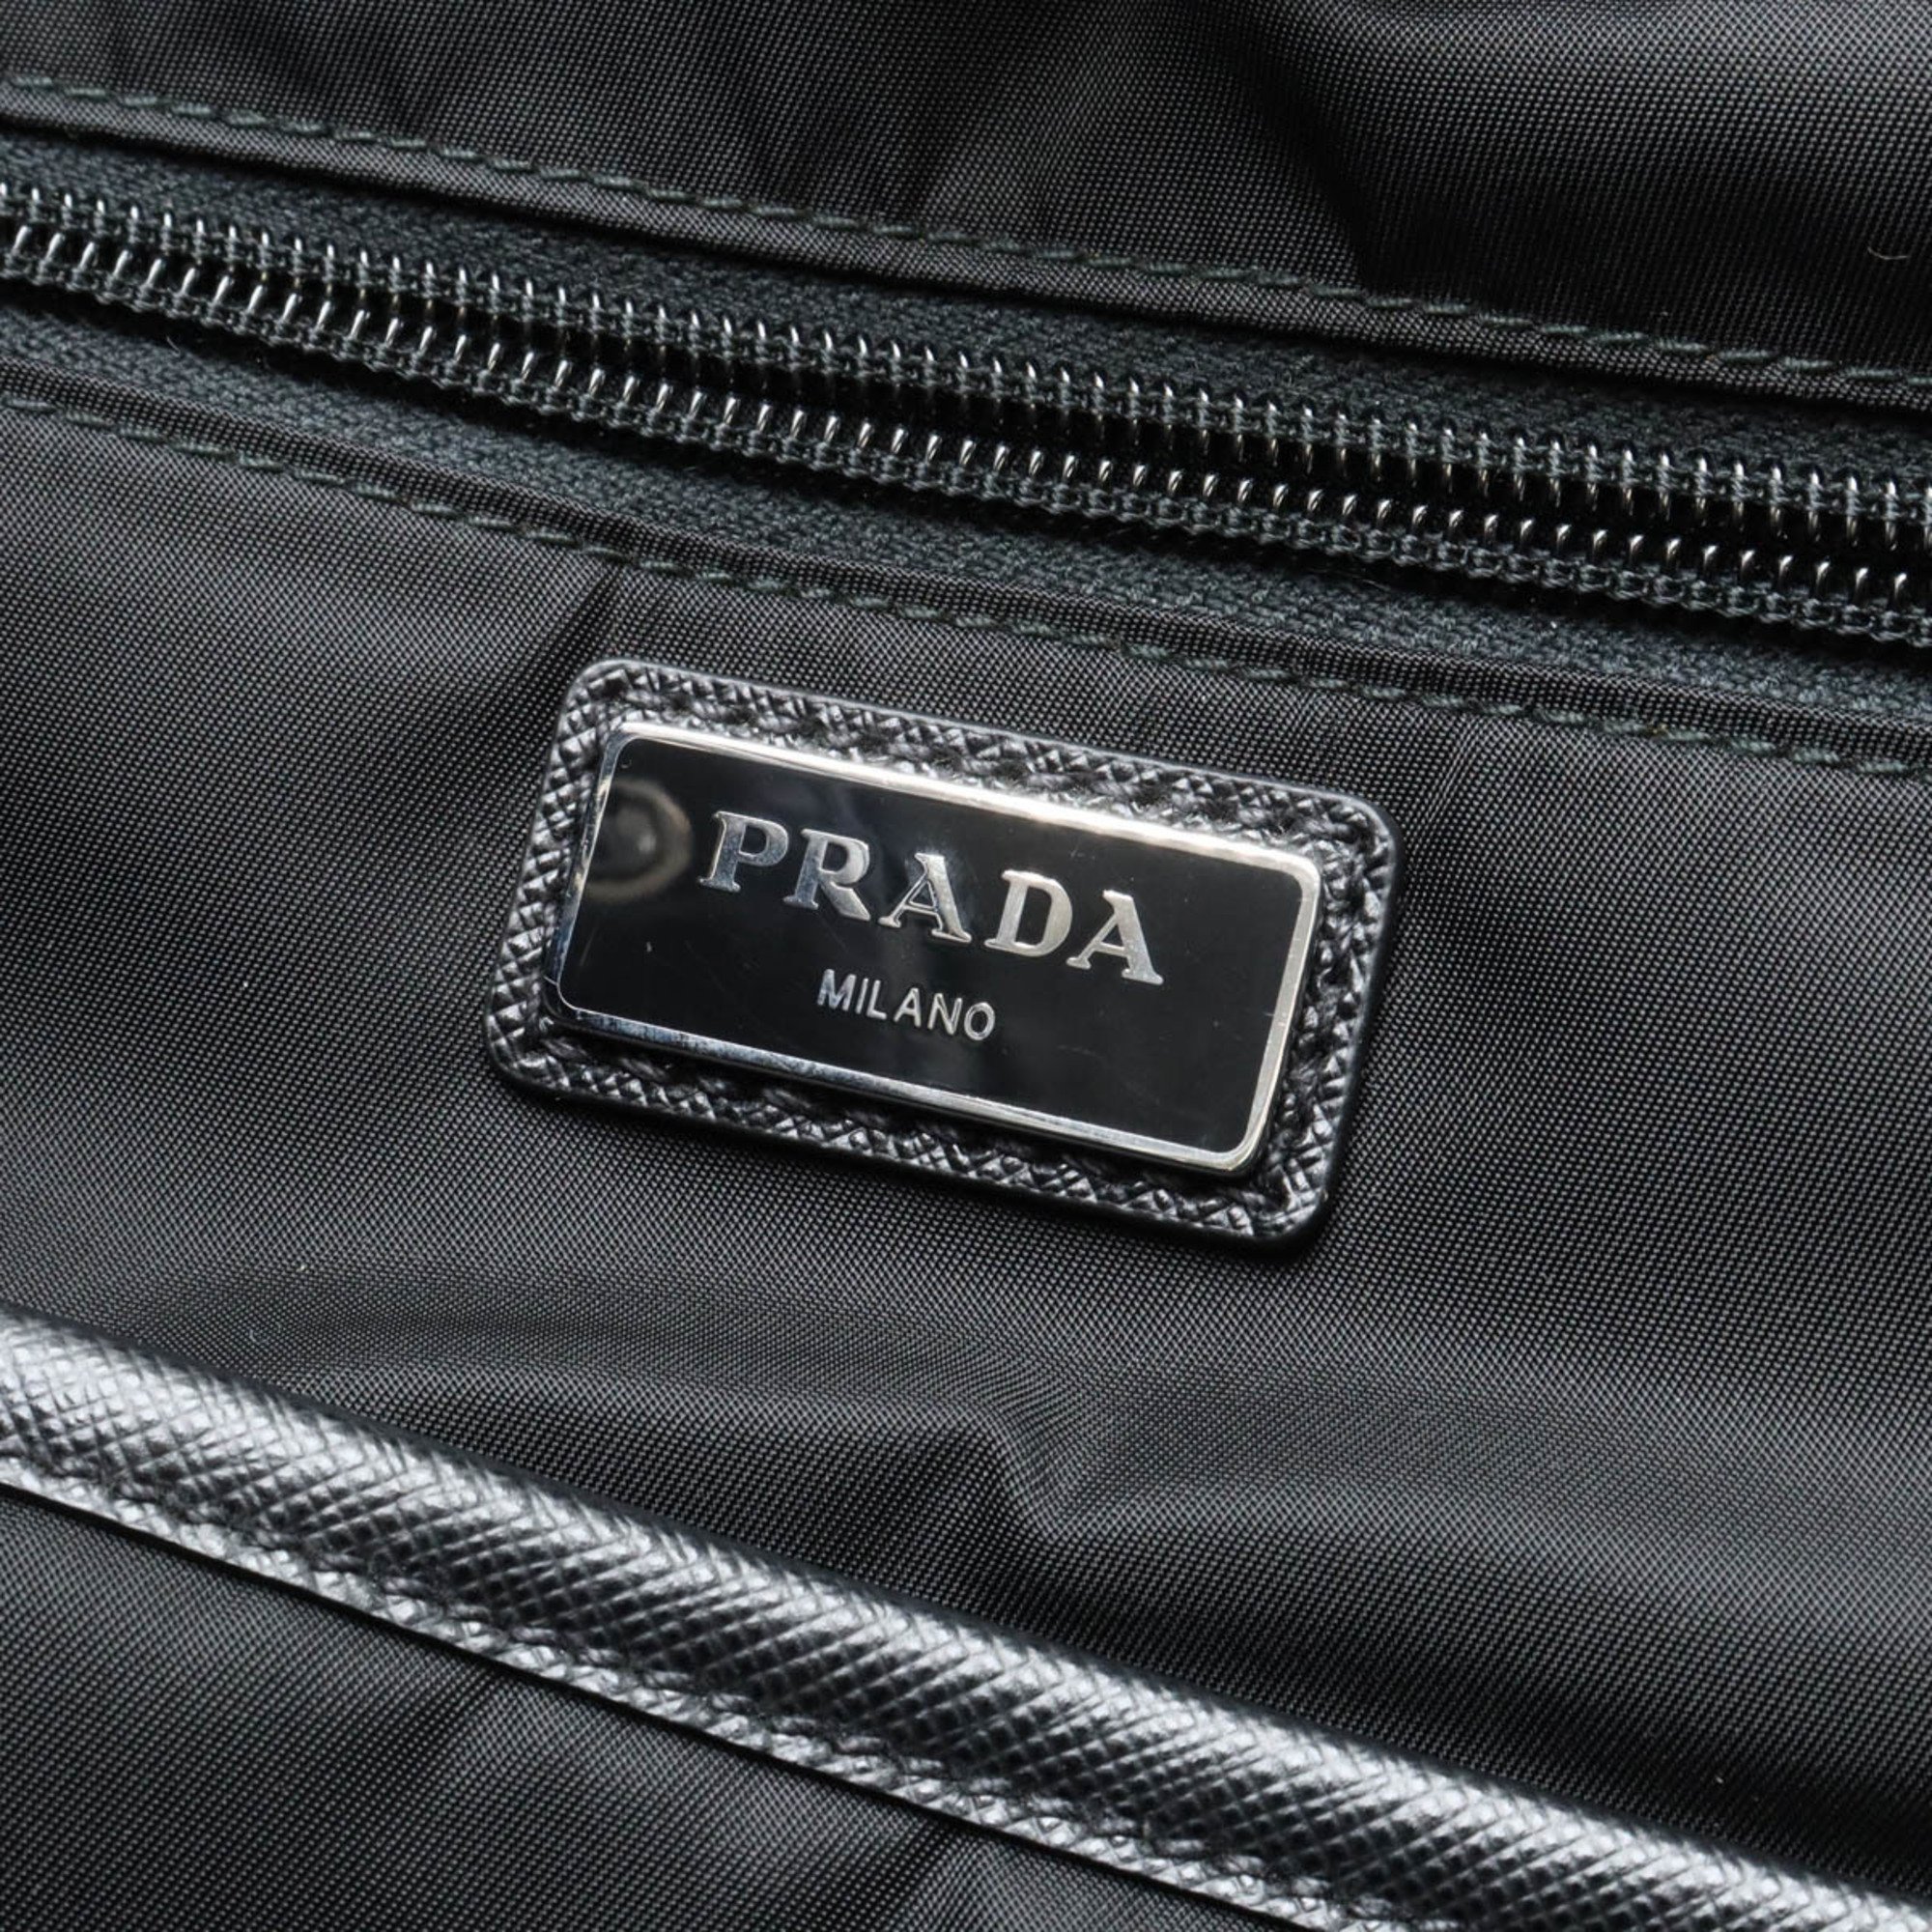 PRADA Prada Backpack Rucksack Daypack Quilted Nylon NERO Black Purchased at a Japanese Boutique 2VZ135